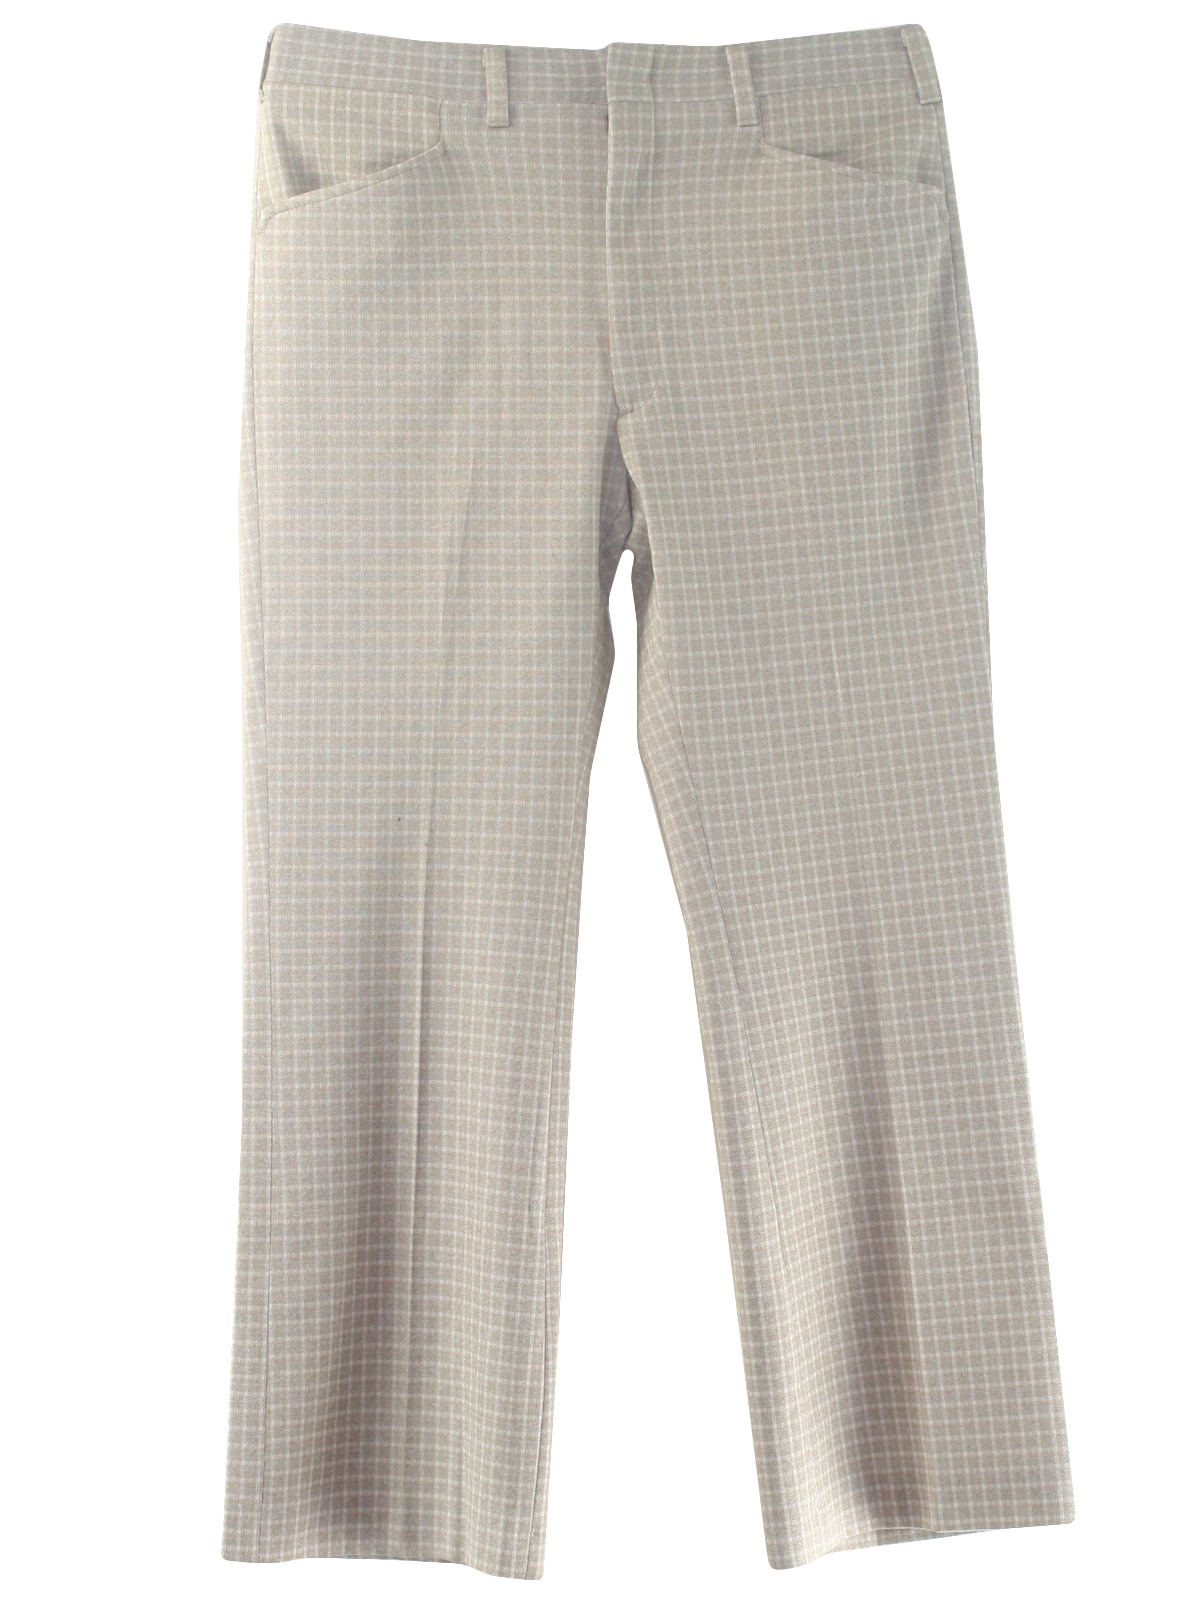 Retro 1970's Pants (Haggar) : 70s -Haggar- Mens beige, off white and ...